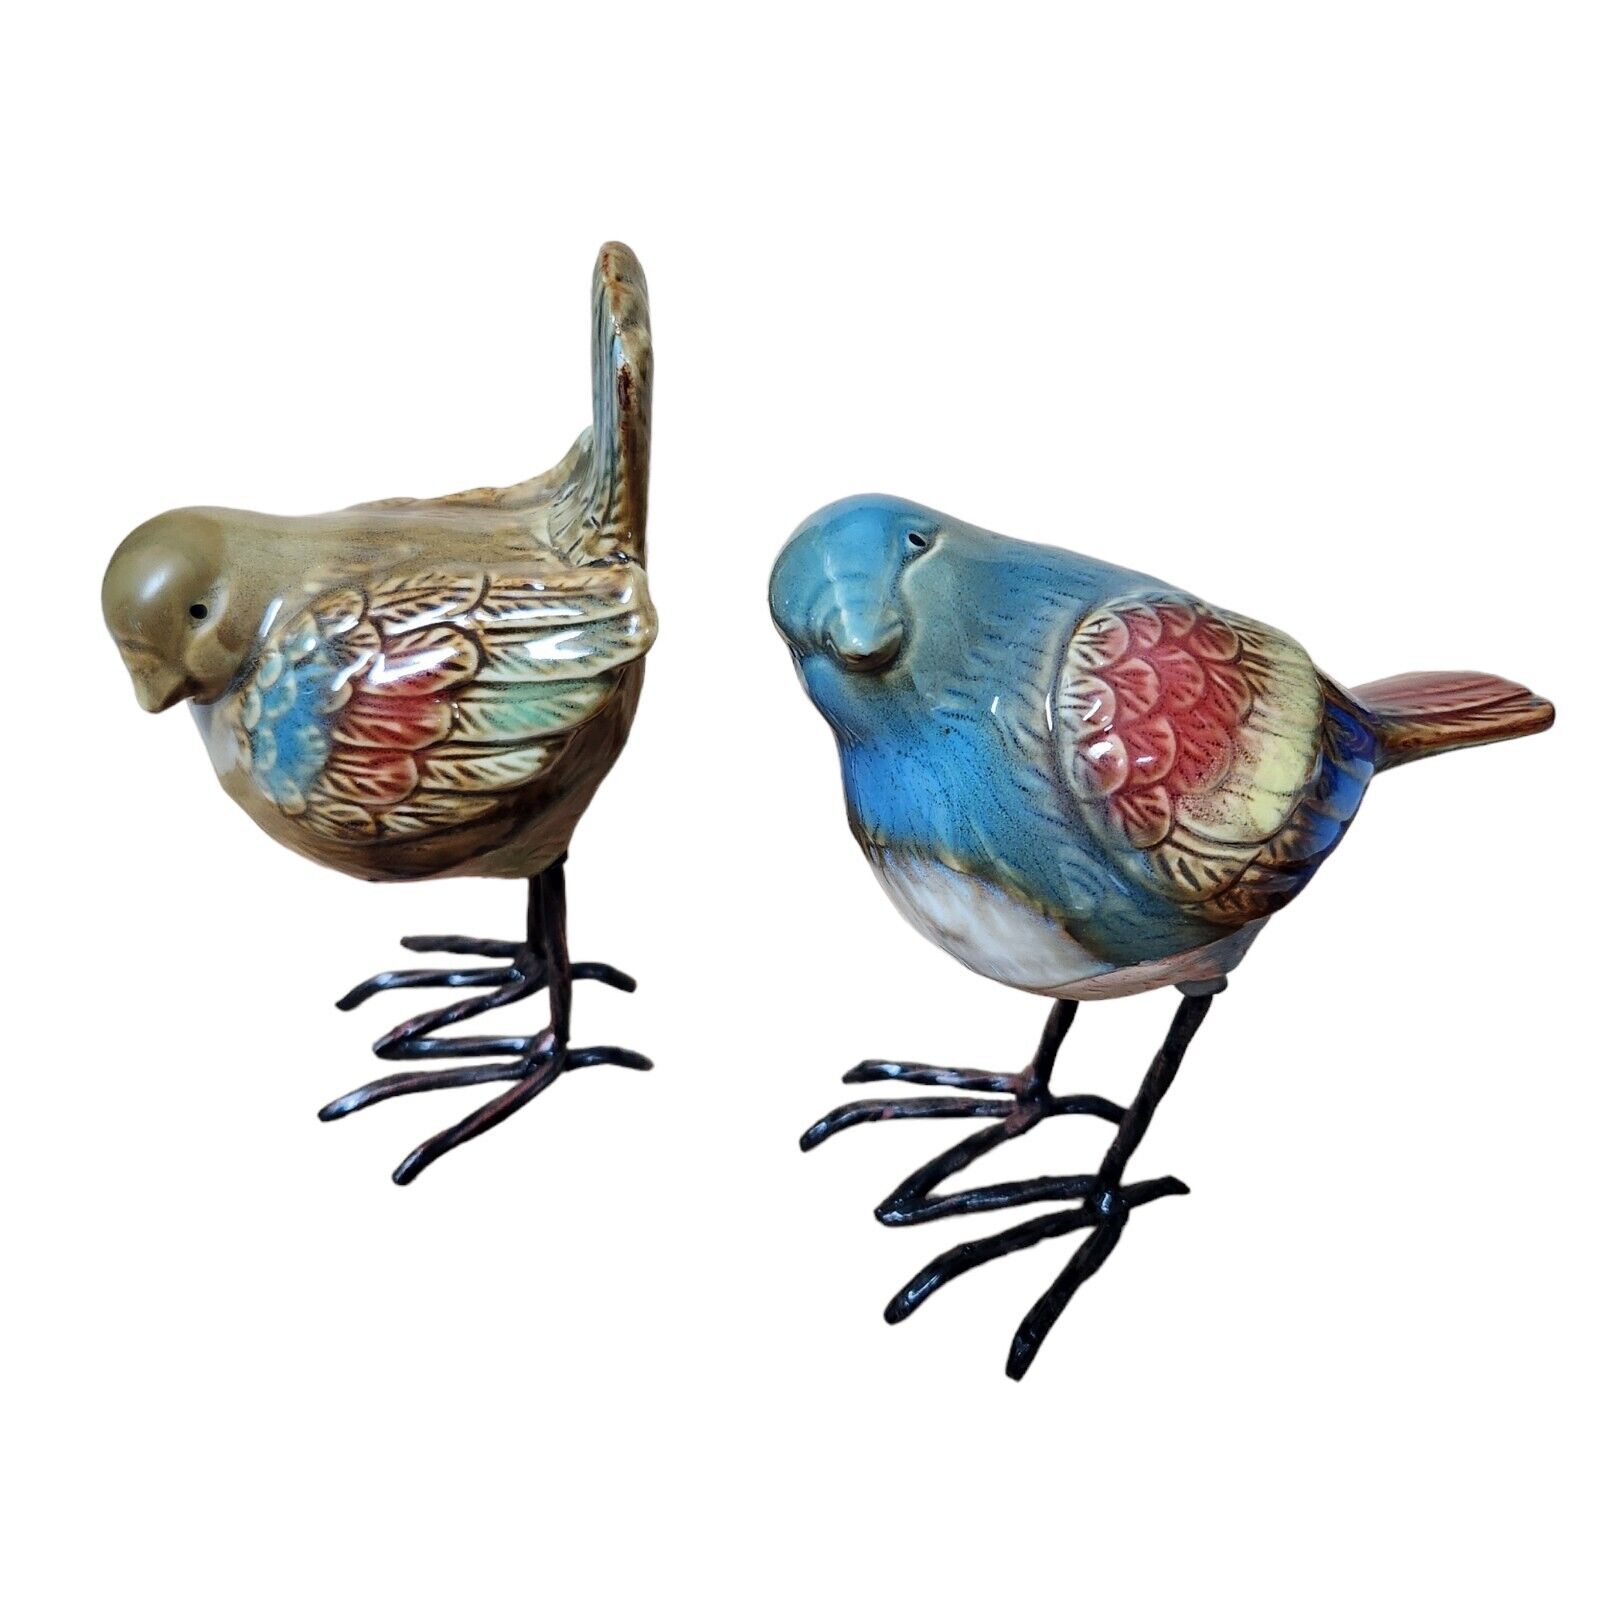 Decorative Glazed Ceramic Bird Figures Hand Painted With Wrought Iron Feet 5\